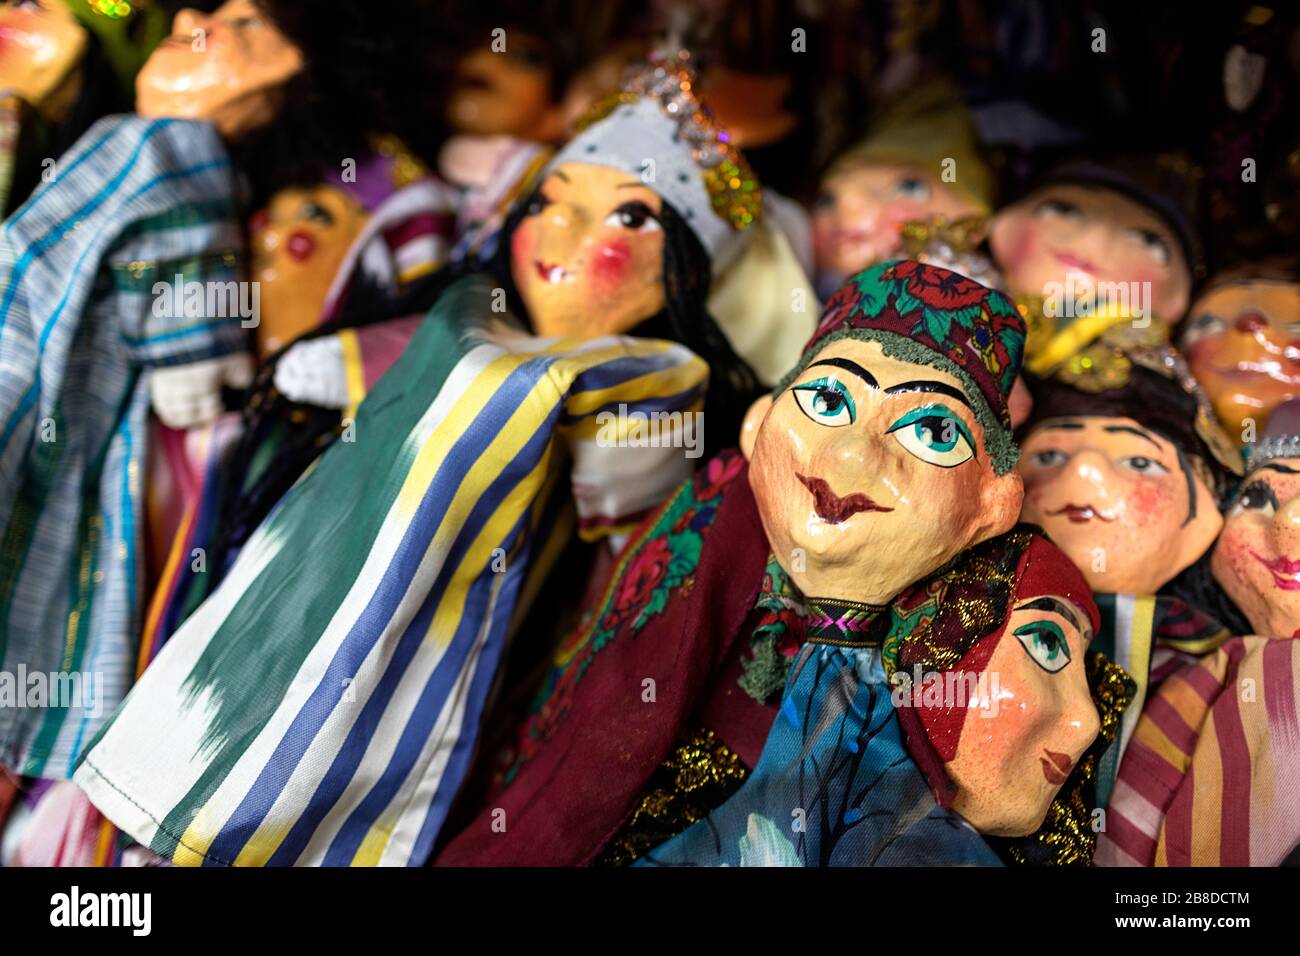 The traditional Uzbek ceramic dolls and hand puppets ceramic of Khiva for sale, Uzbekistan Stock Photo